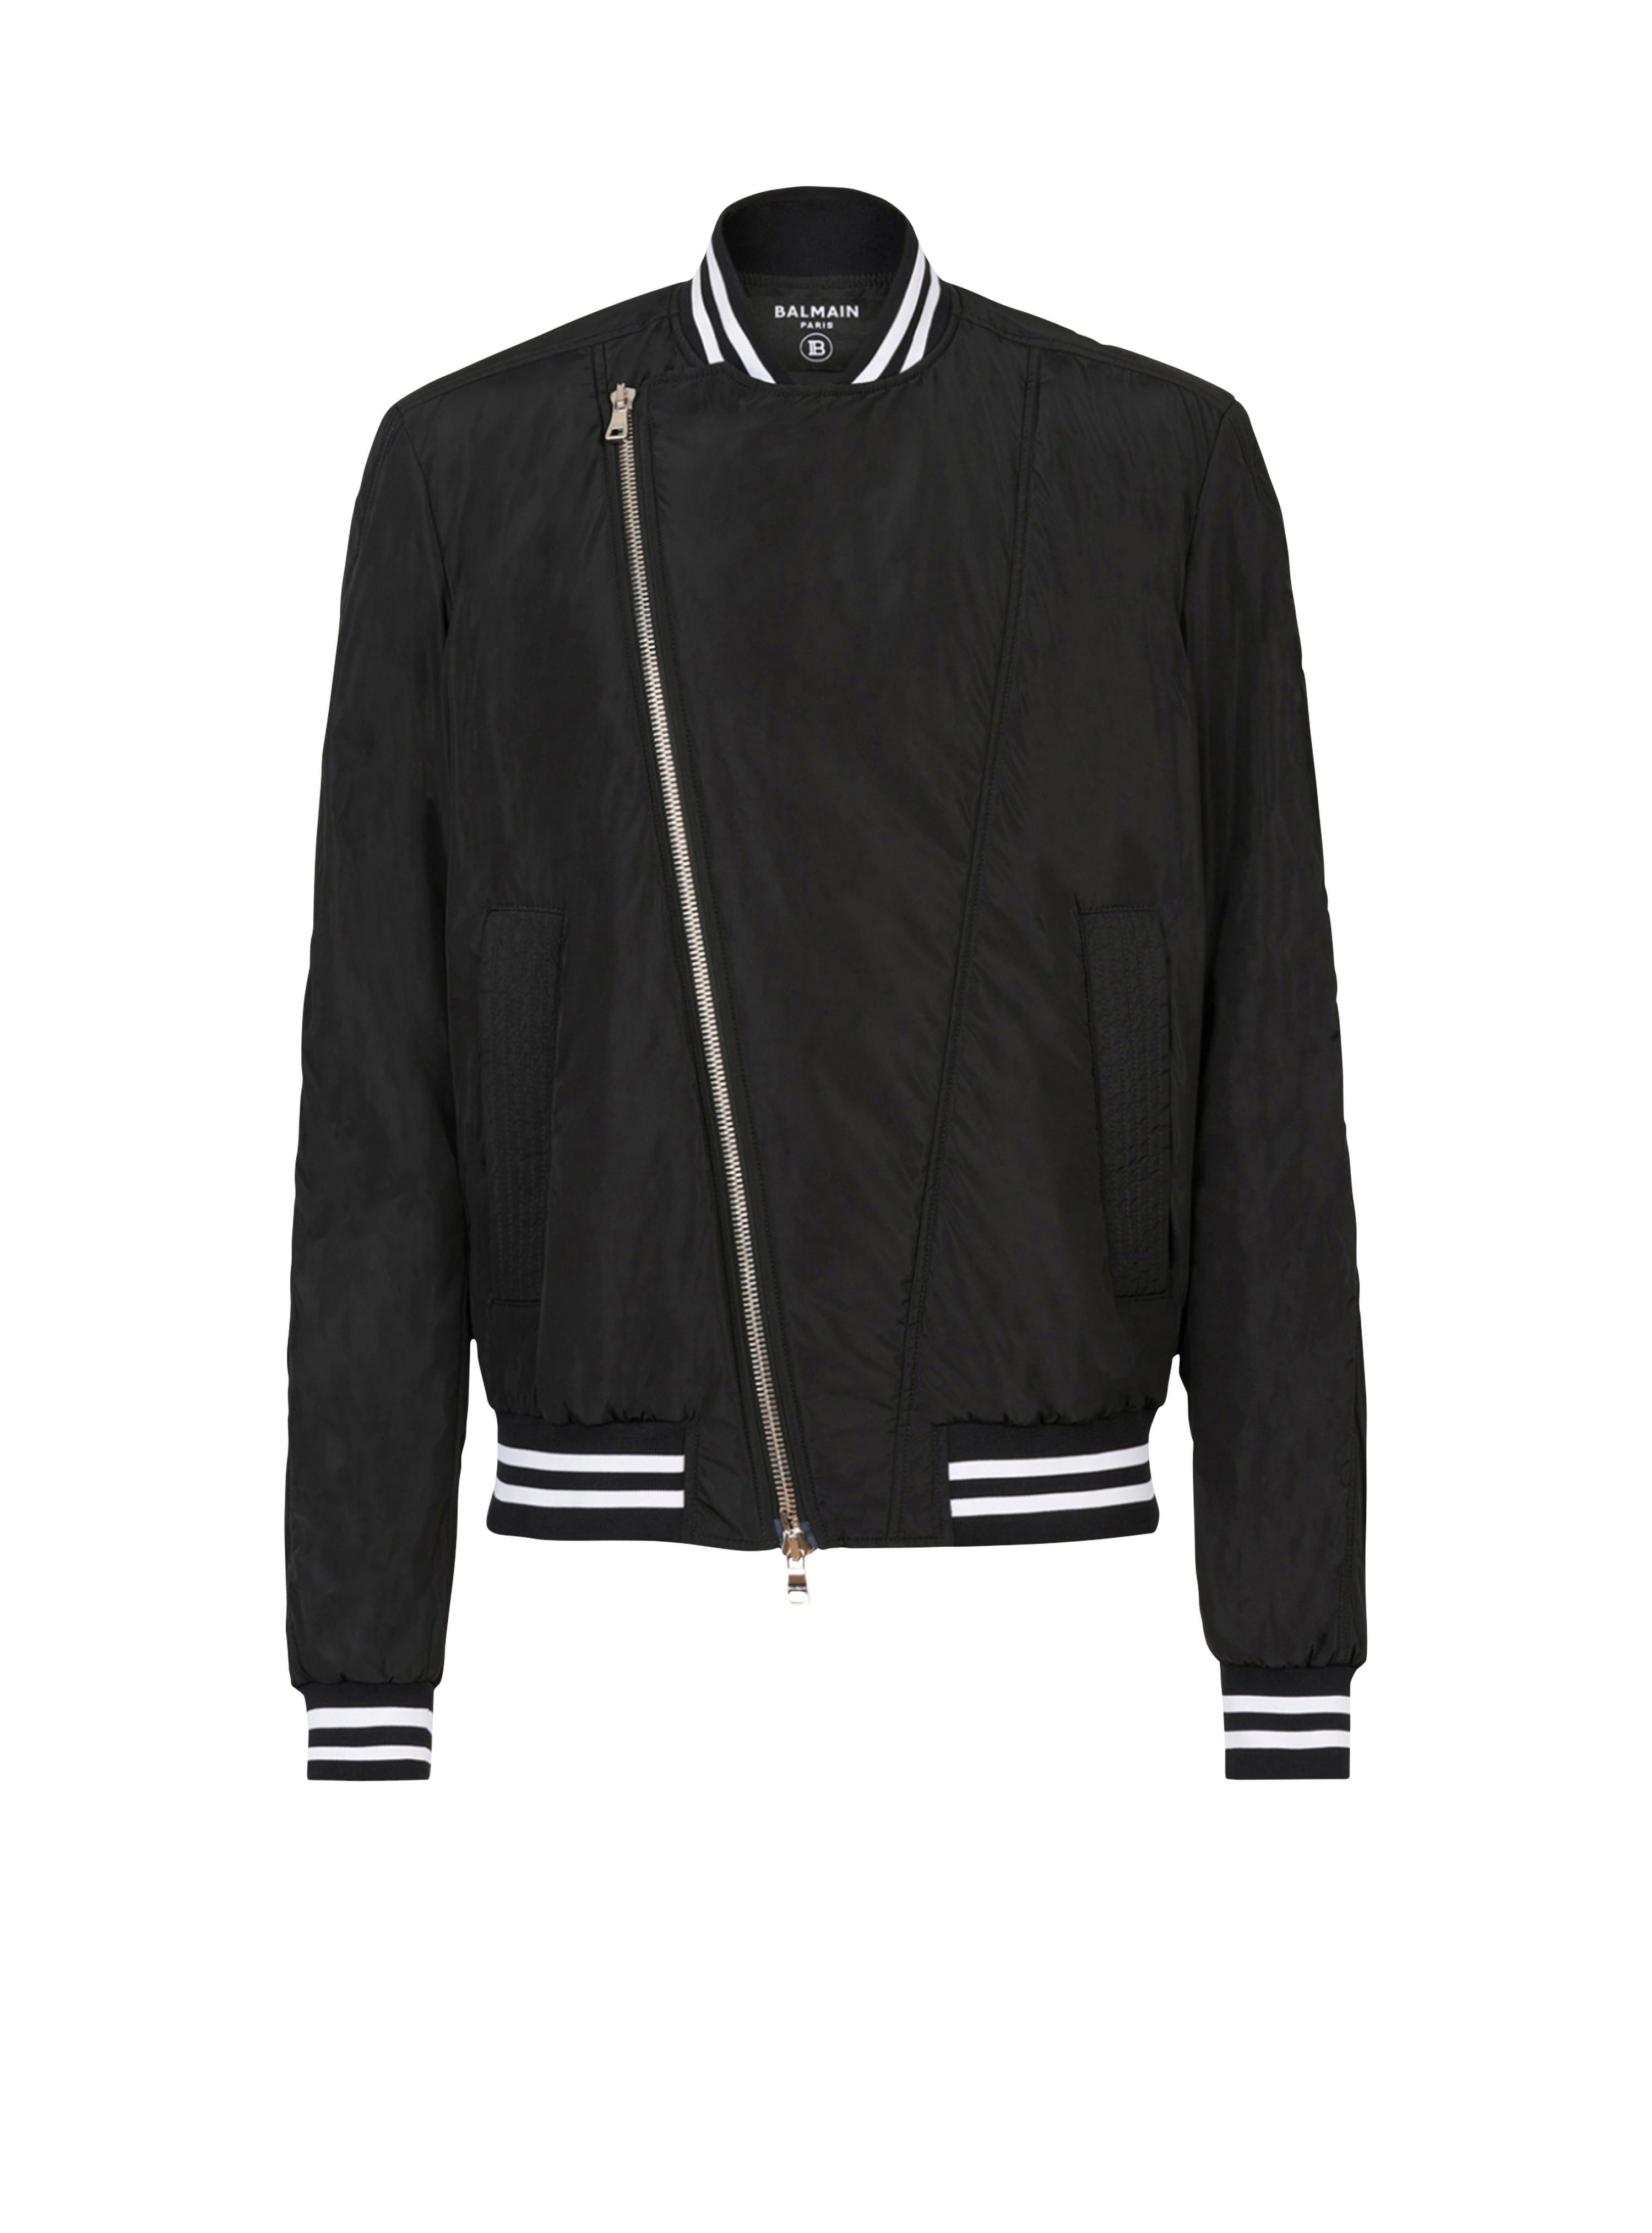 Nylon bomber jacket, black